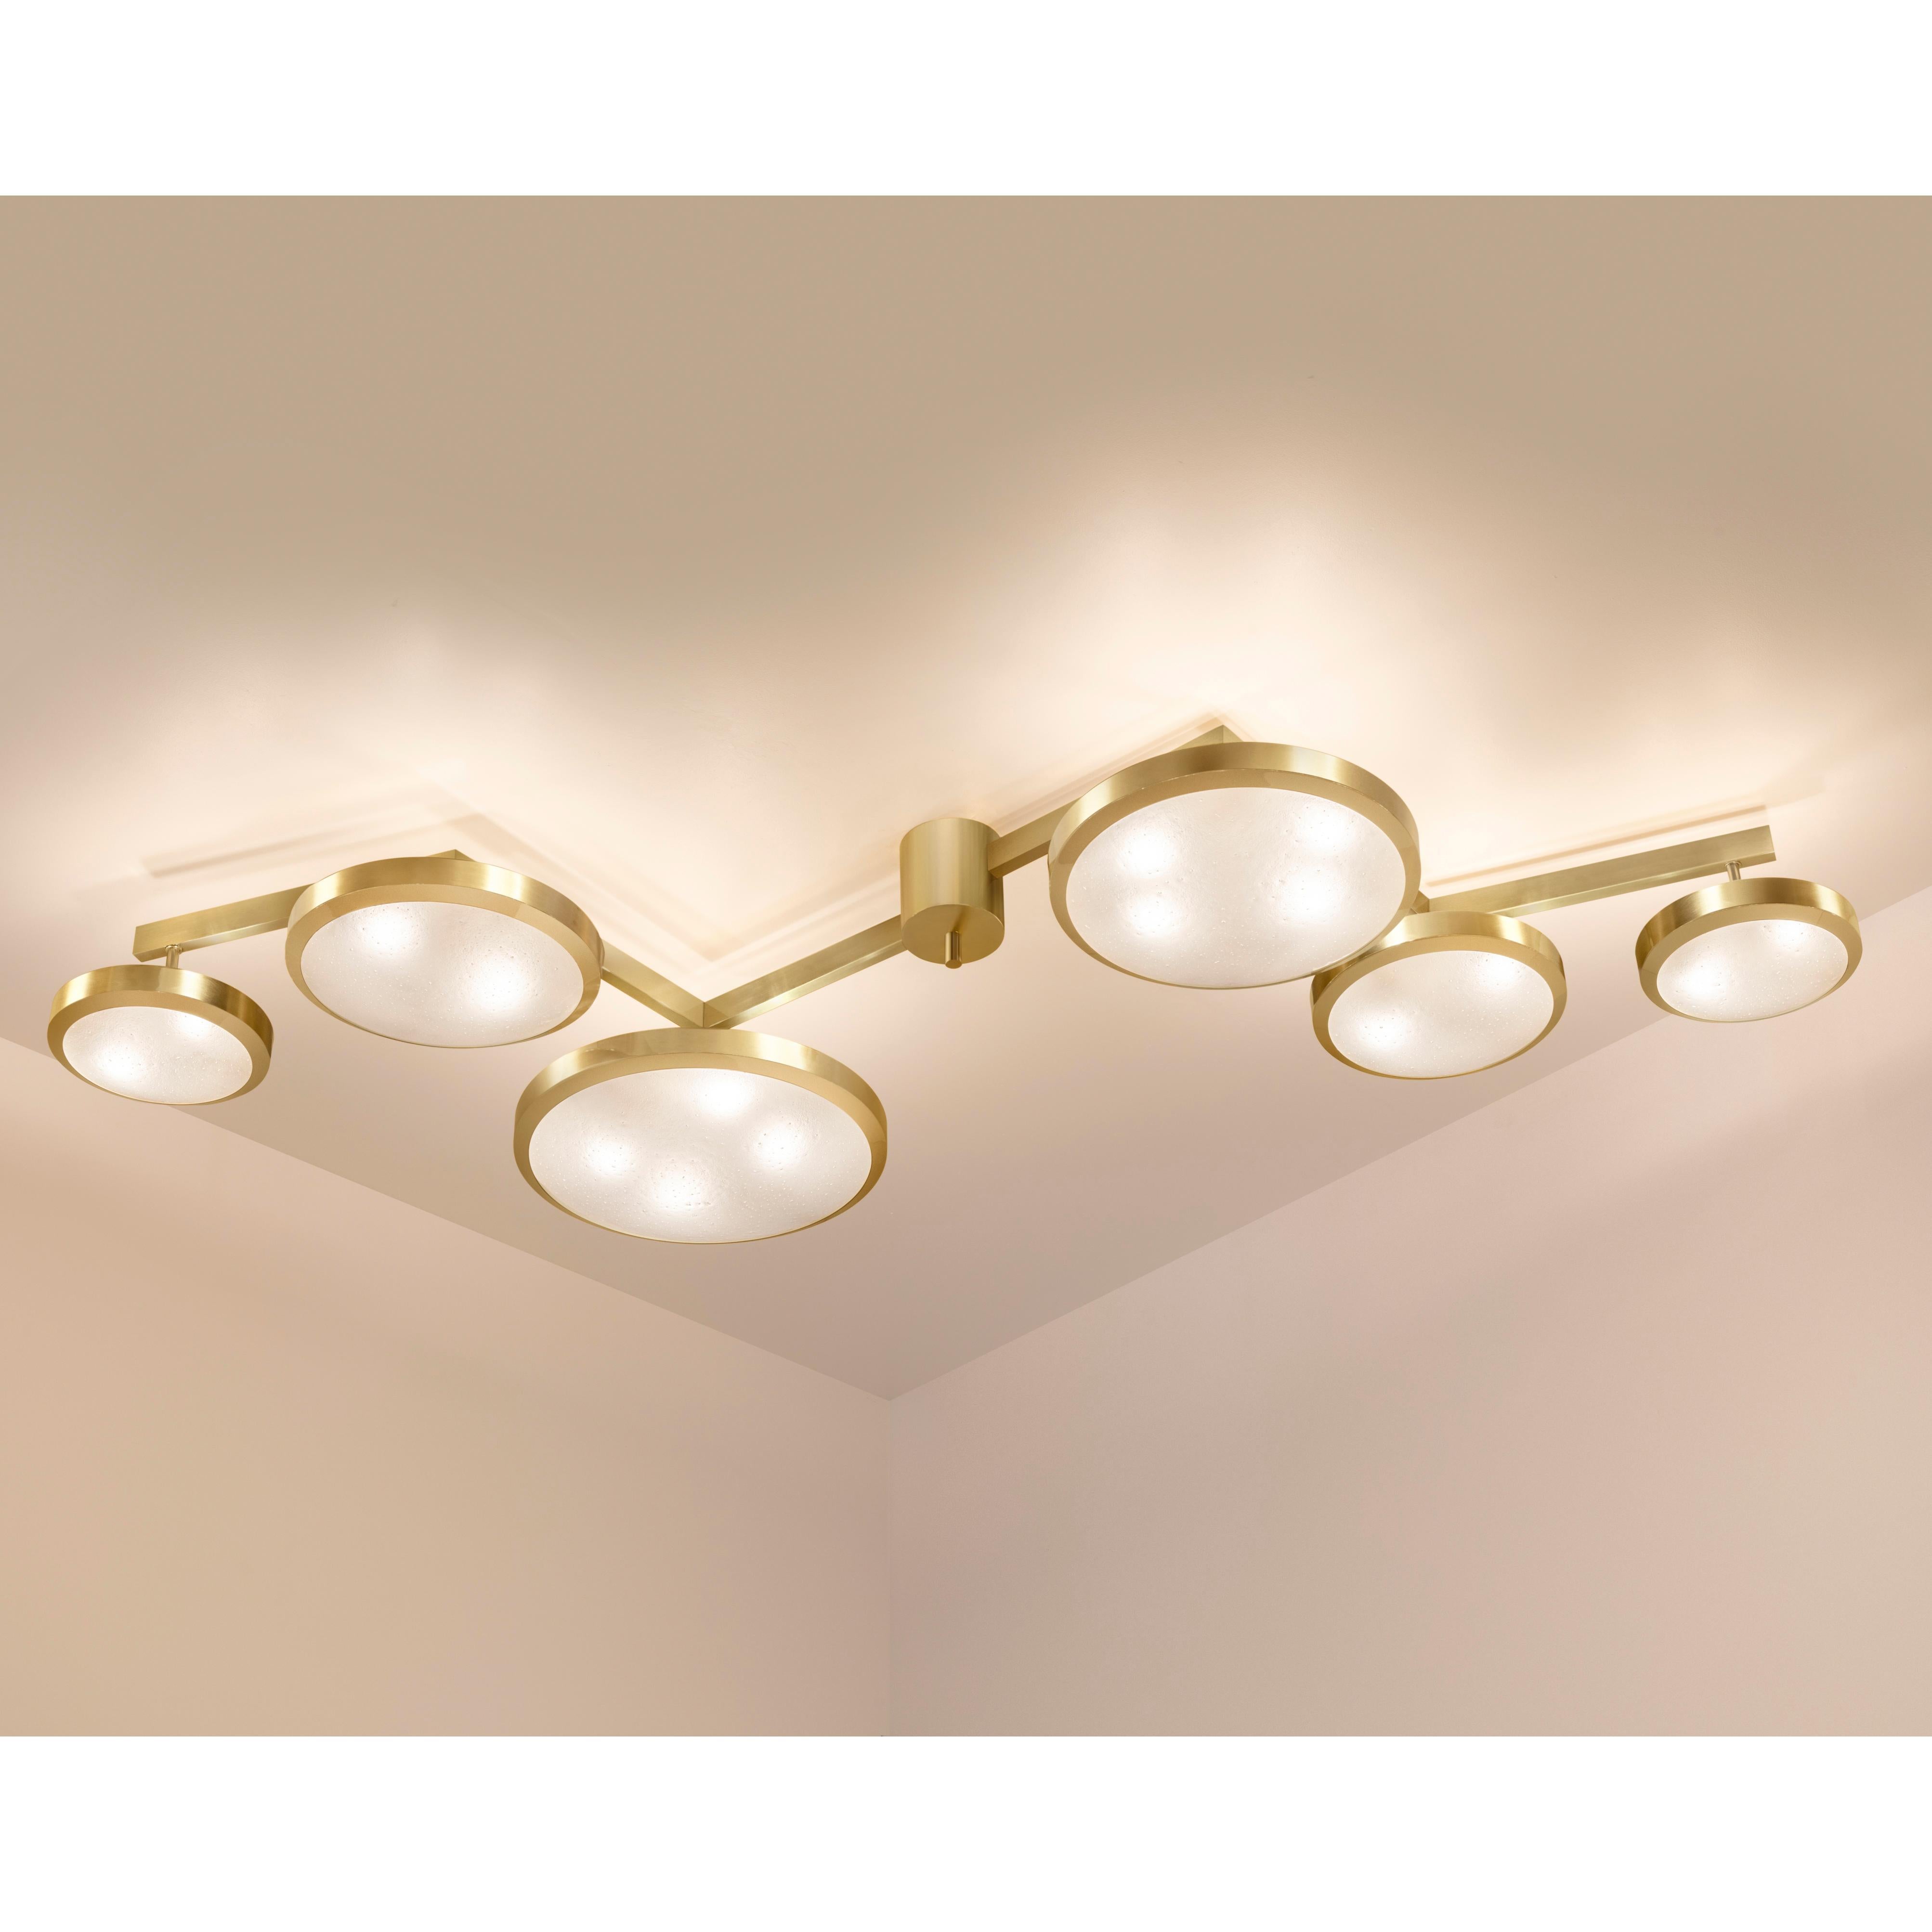 Geometria Sospesa Ceiling Light by Gaspare Asaro - Polished Brass For Sale 8